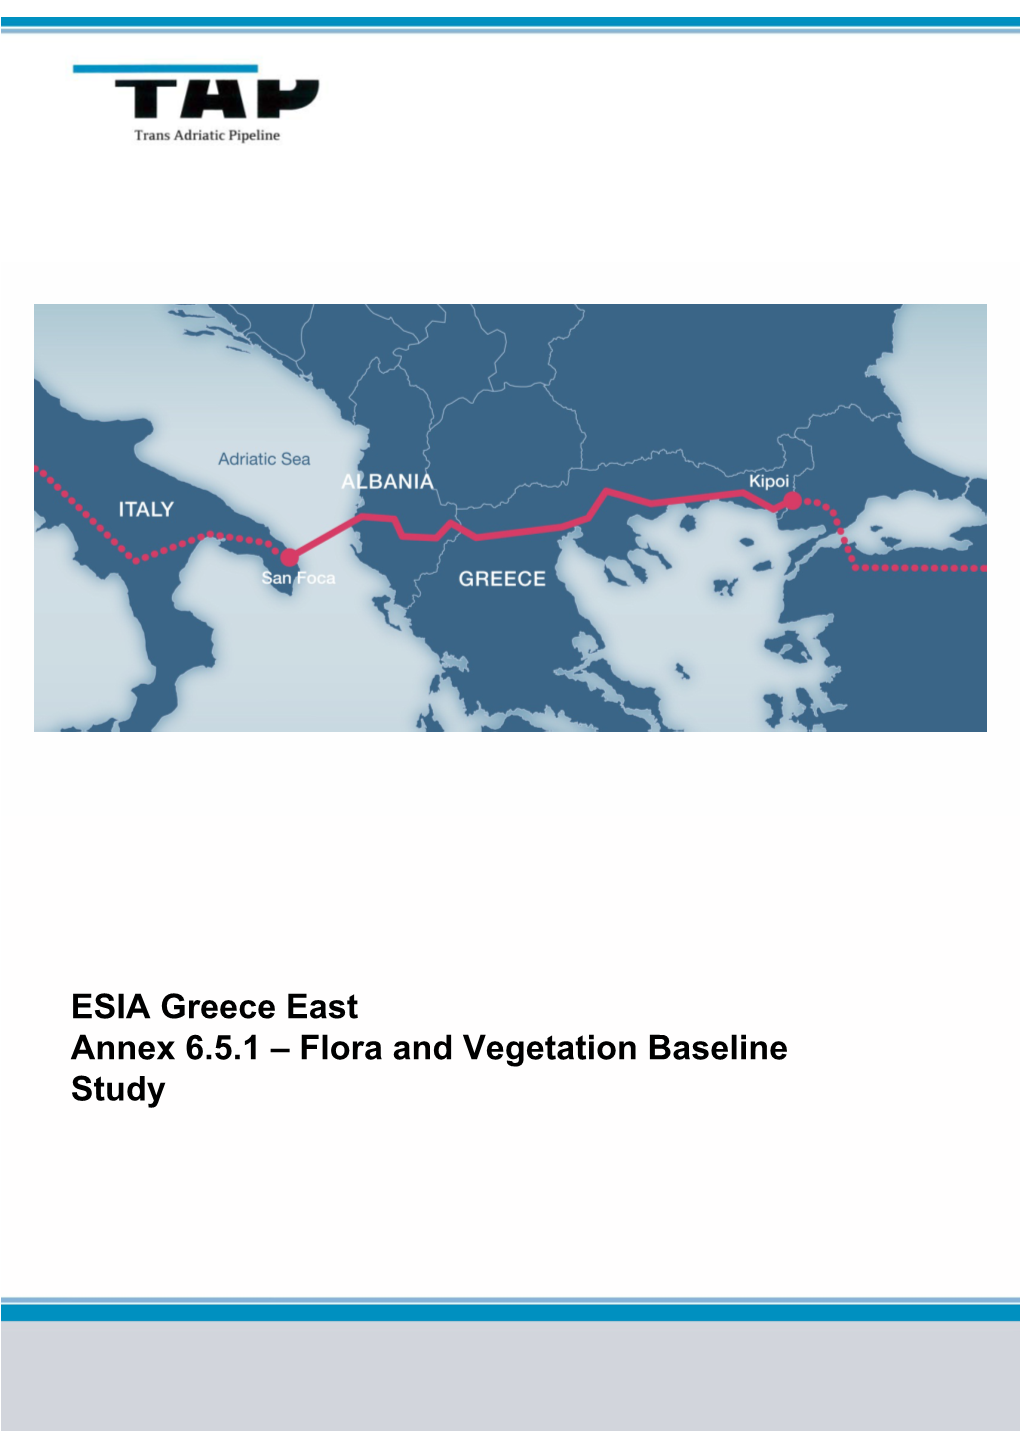 ESIA Greece Annex 6.5.1 – East